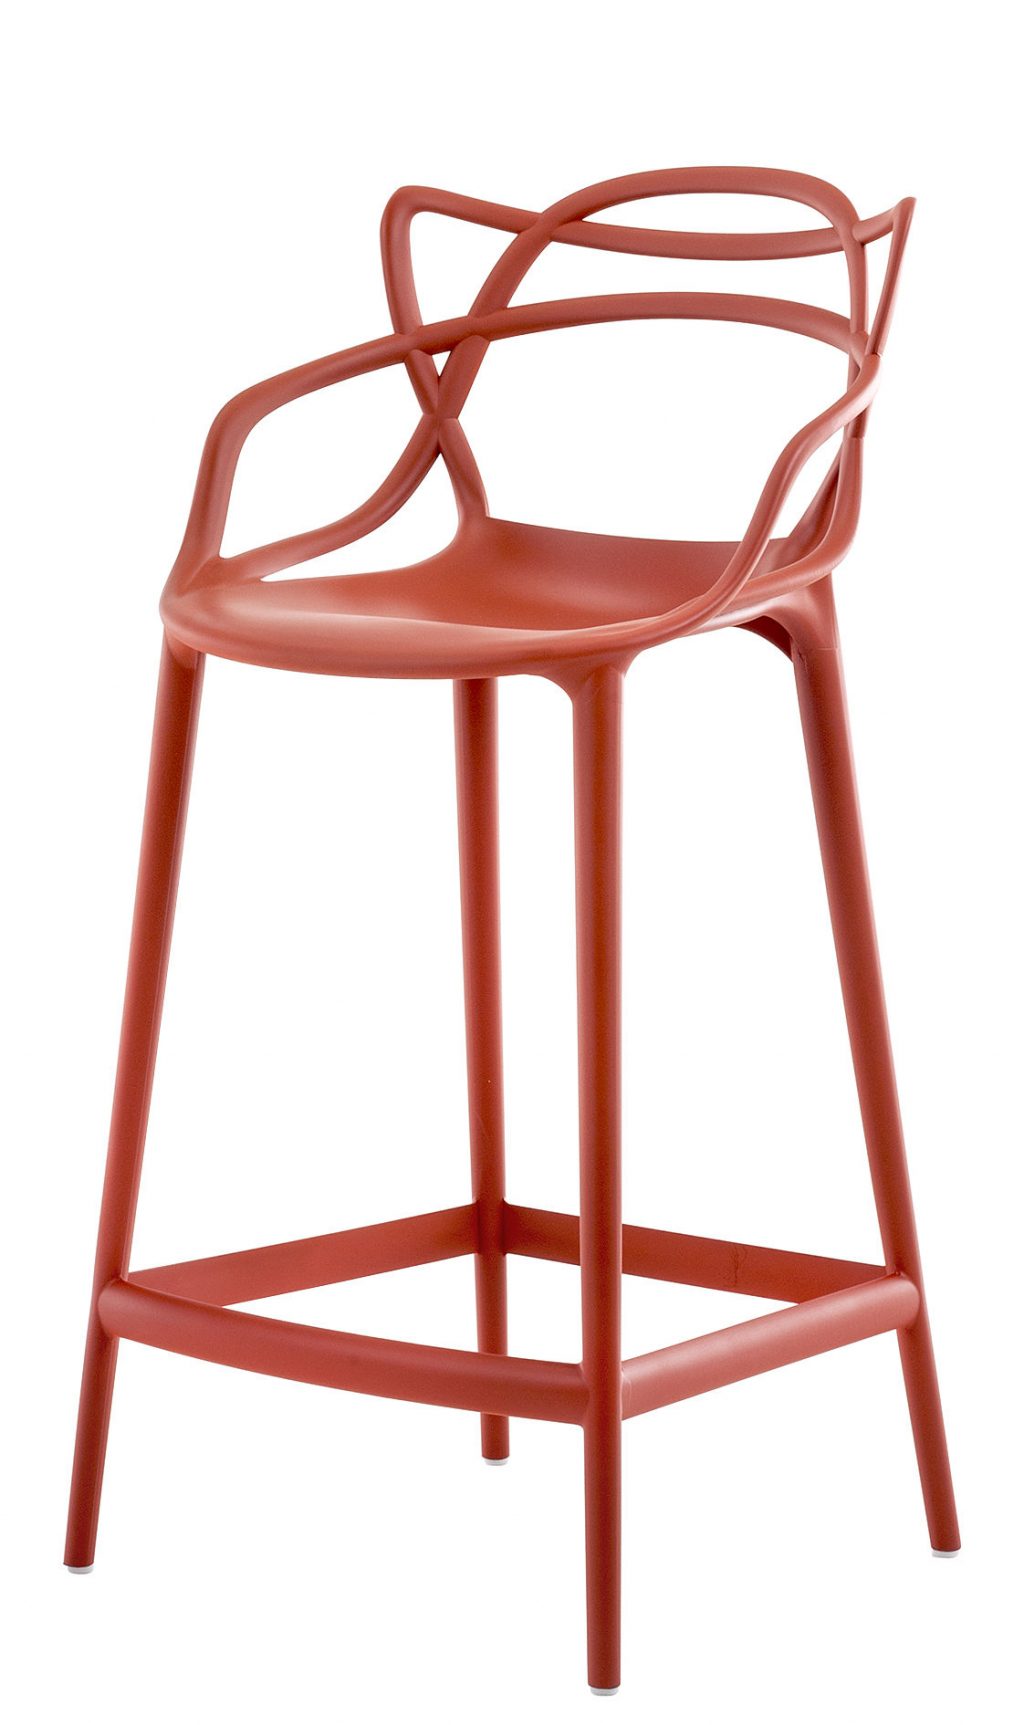 Sgabello alto Masters - H 65 cm Arancio ruggine Kartell Philippe Starck|Eugeni Quitllet 1